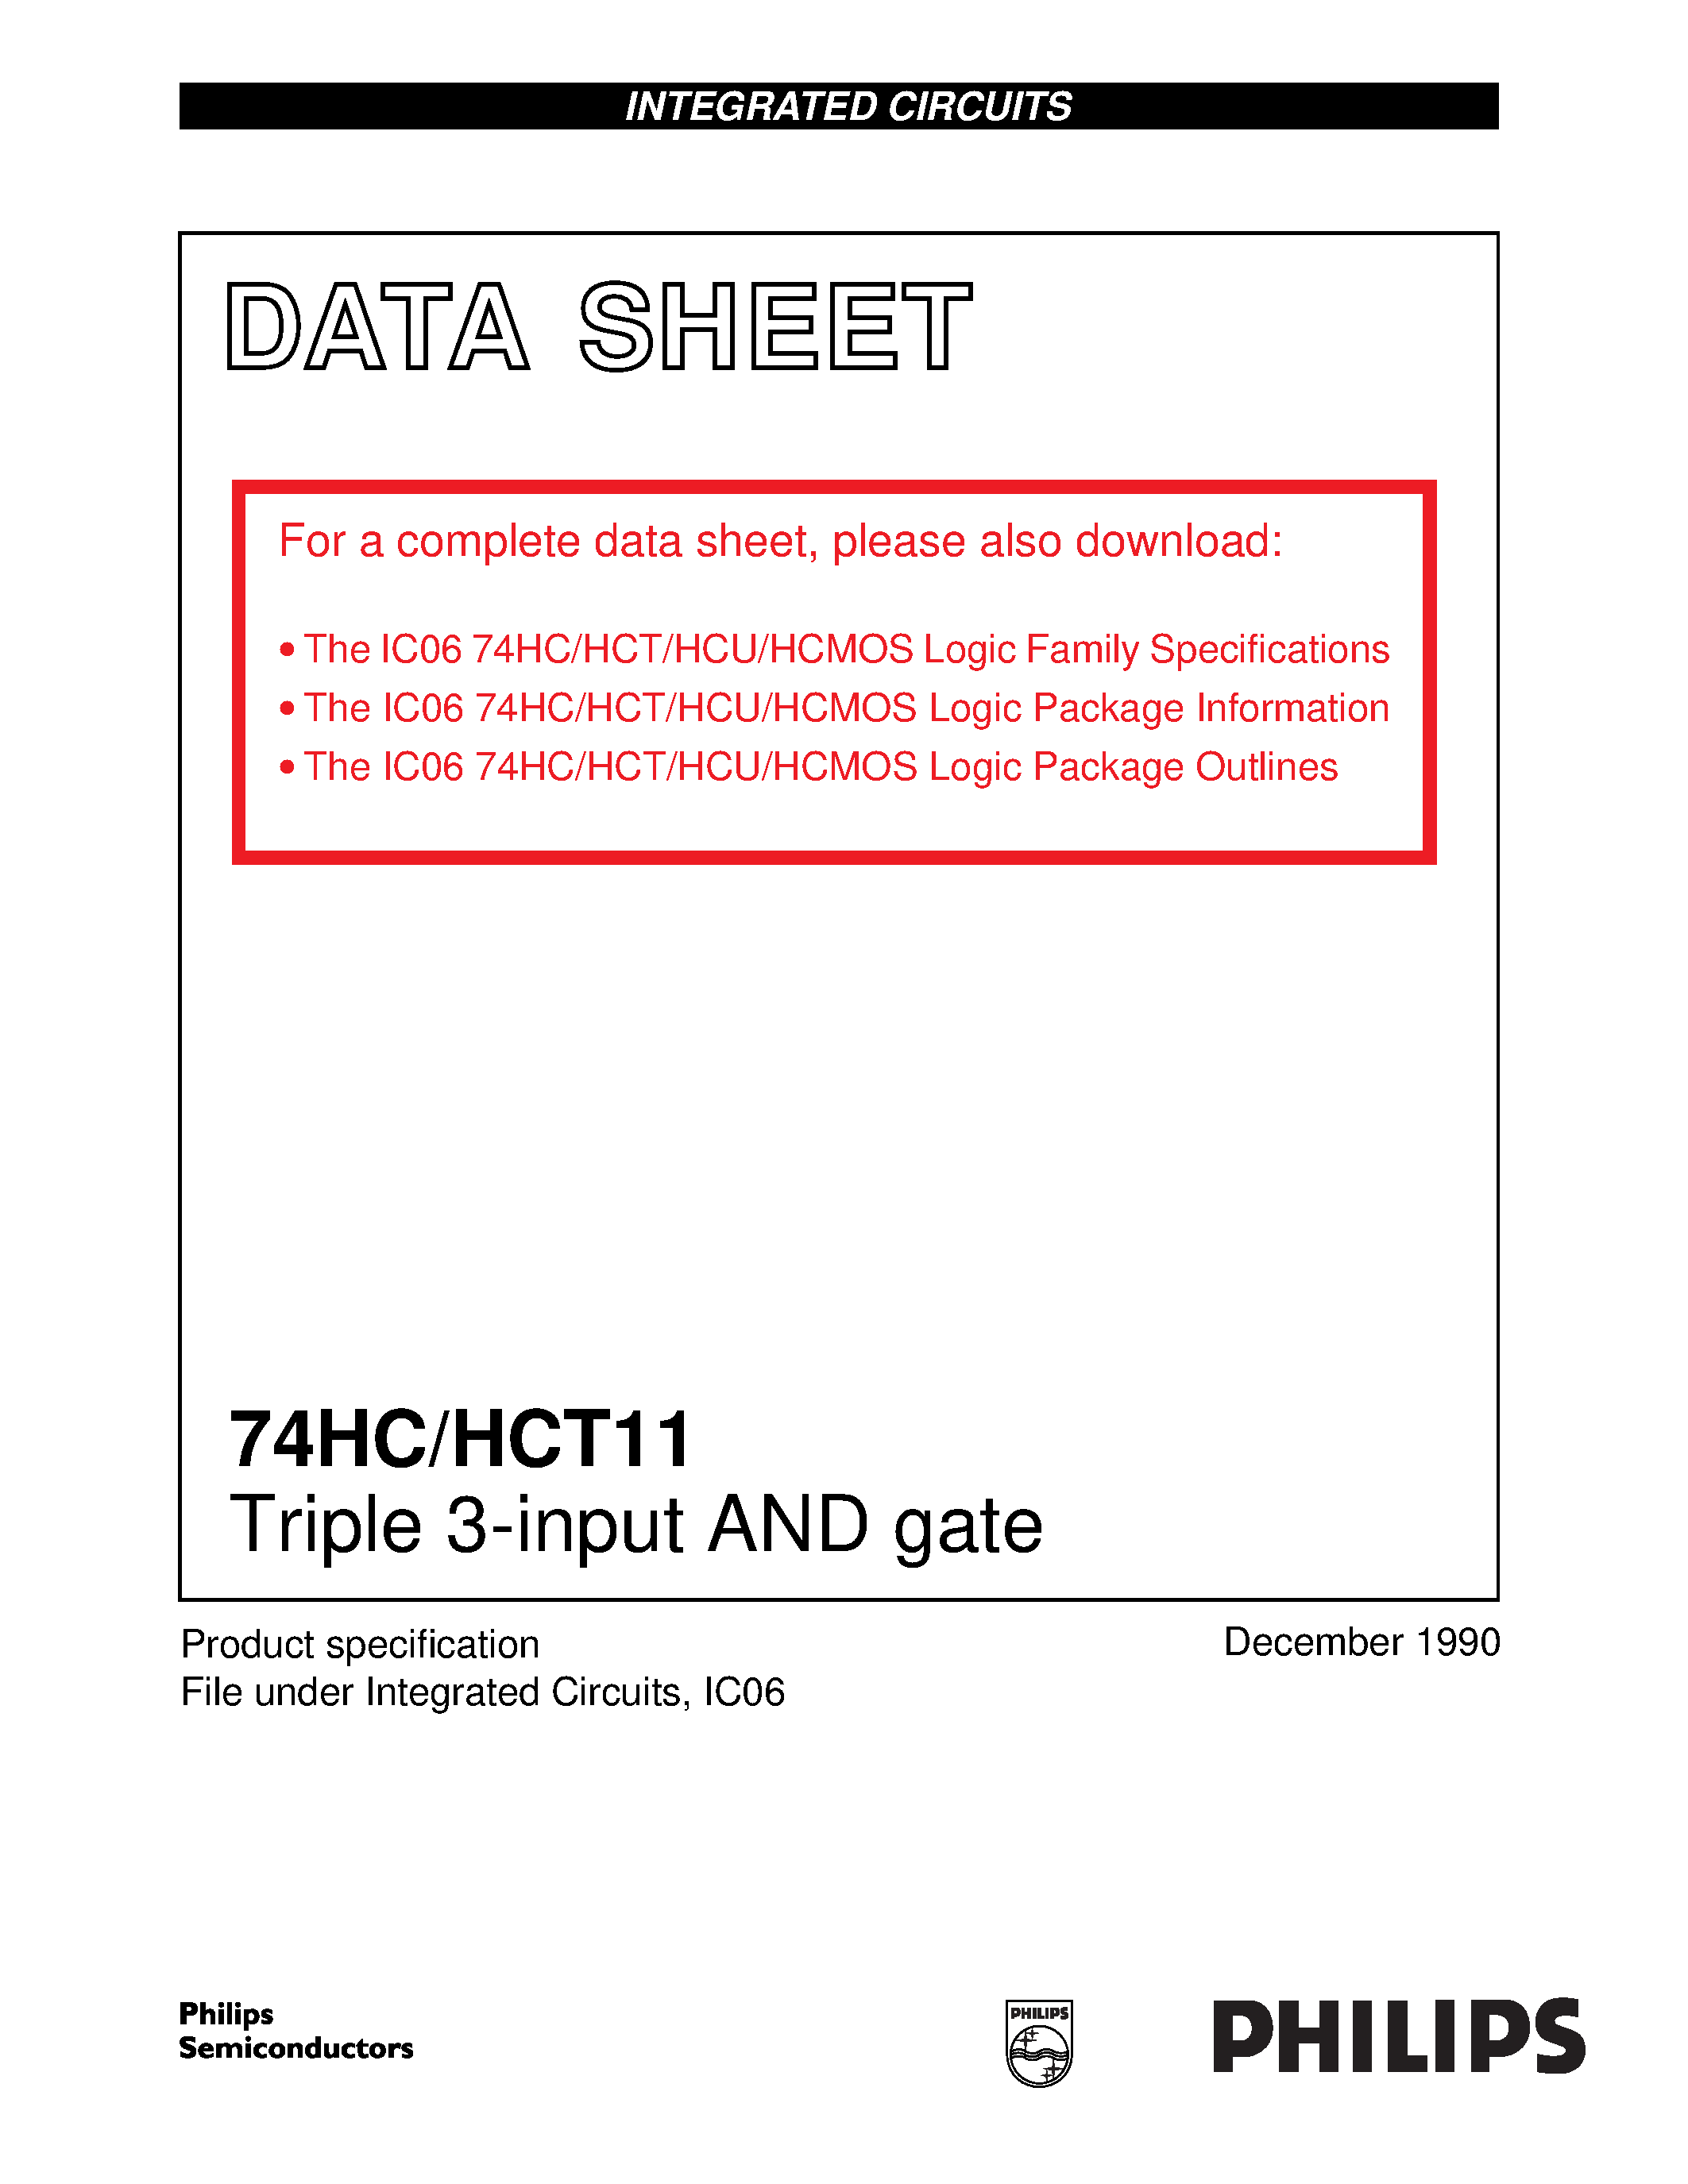 Даташит 74HC11 - Triple 3-input AND gate страница 1